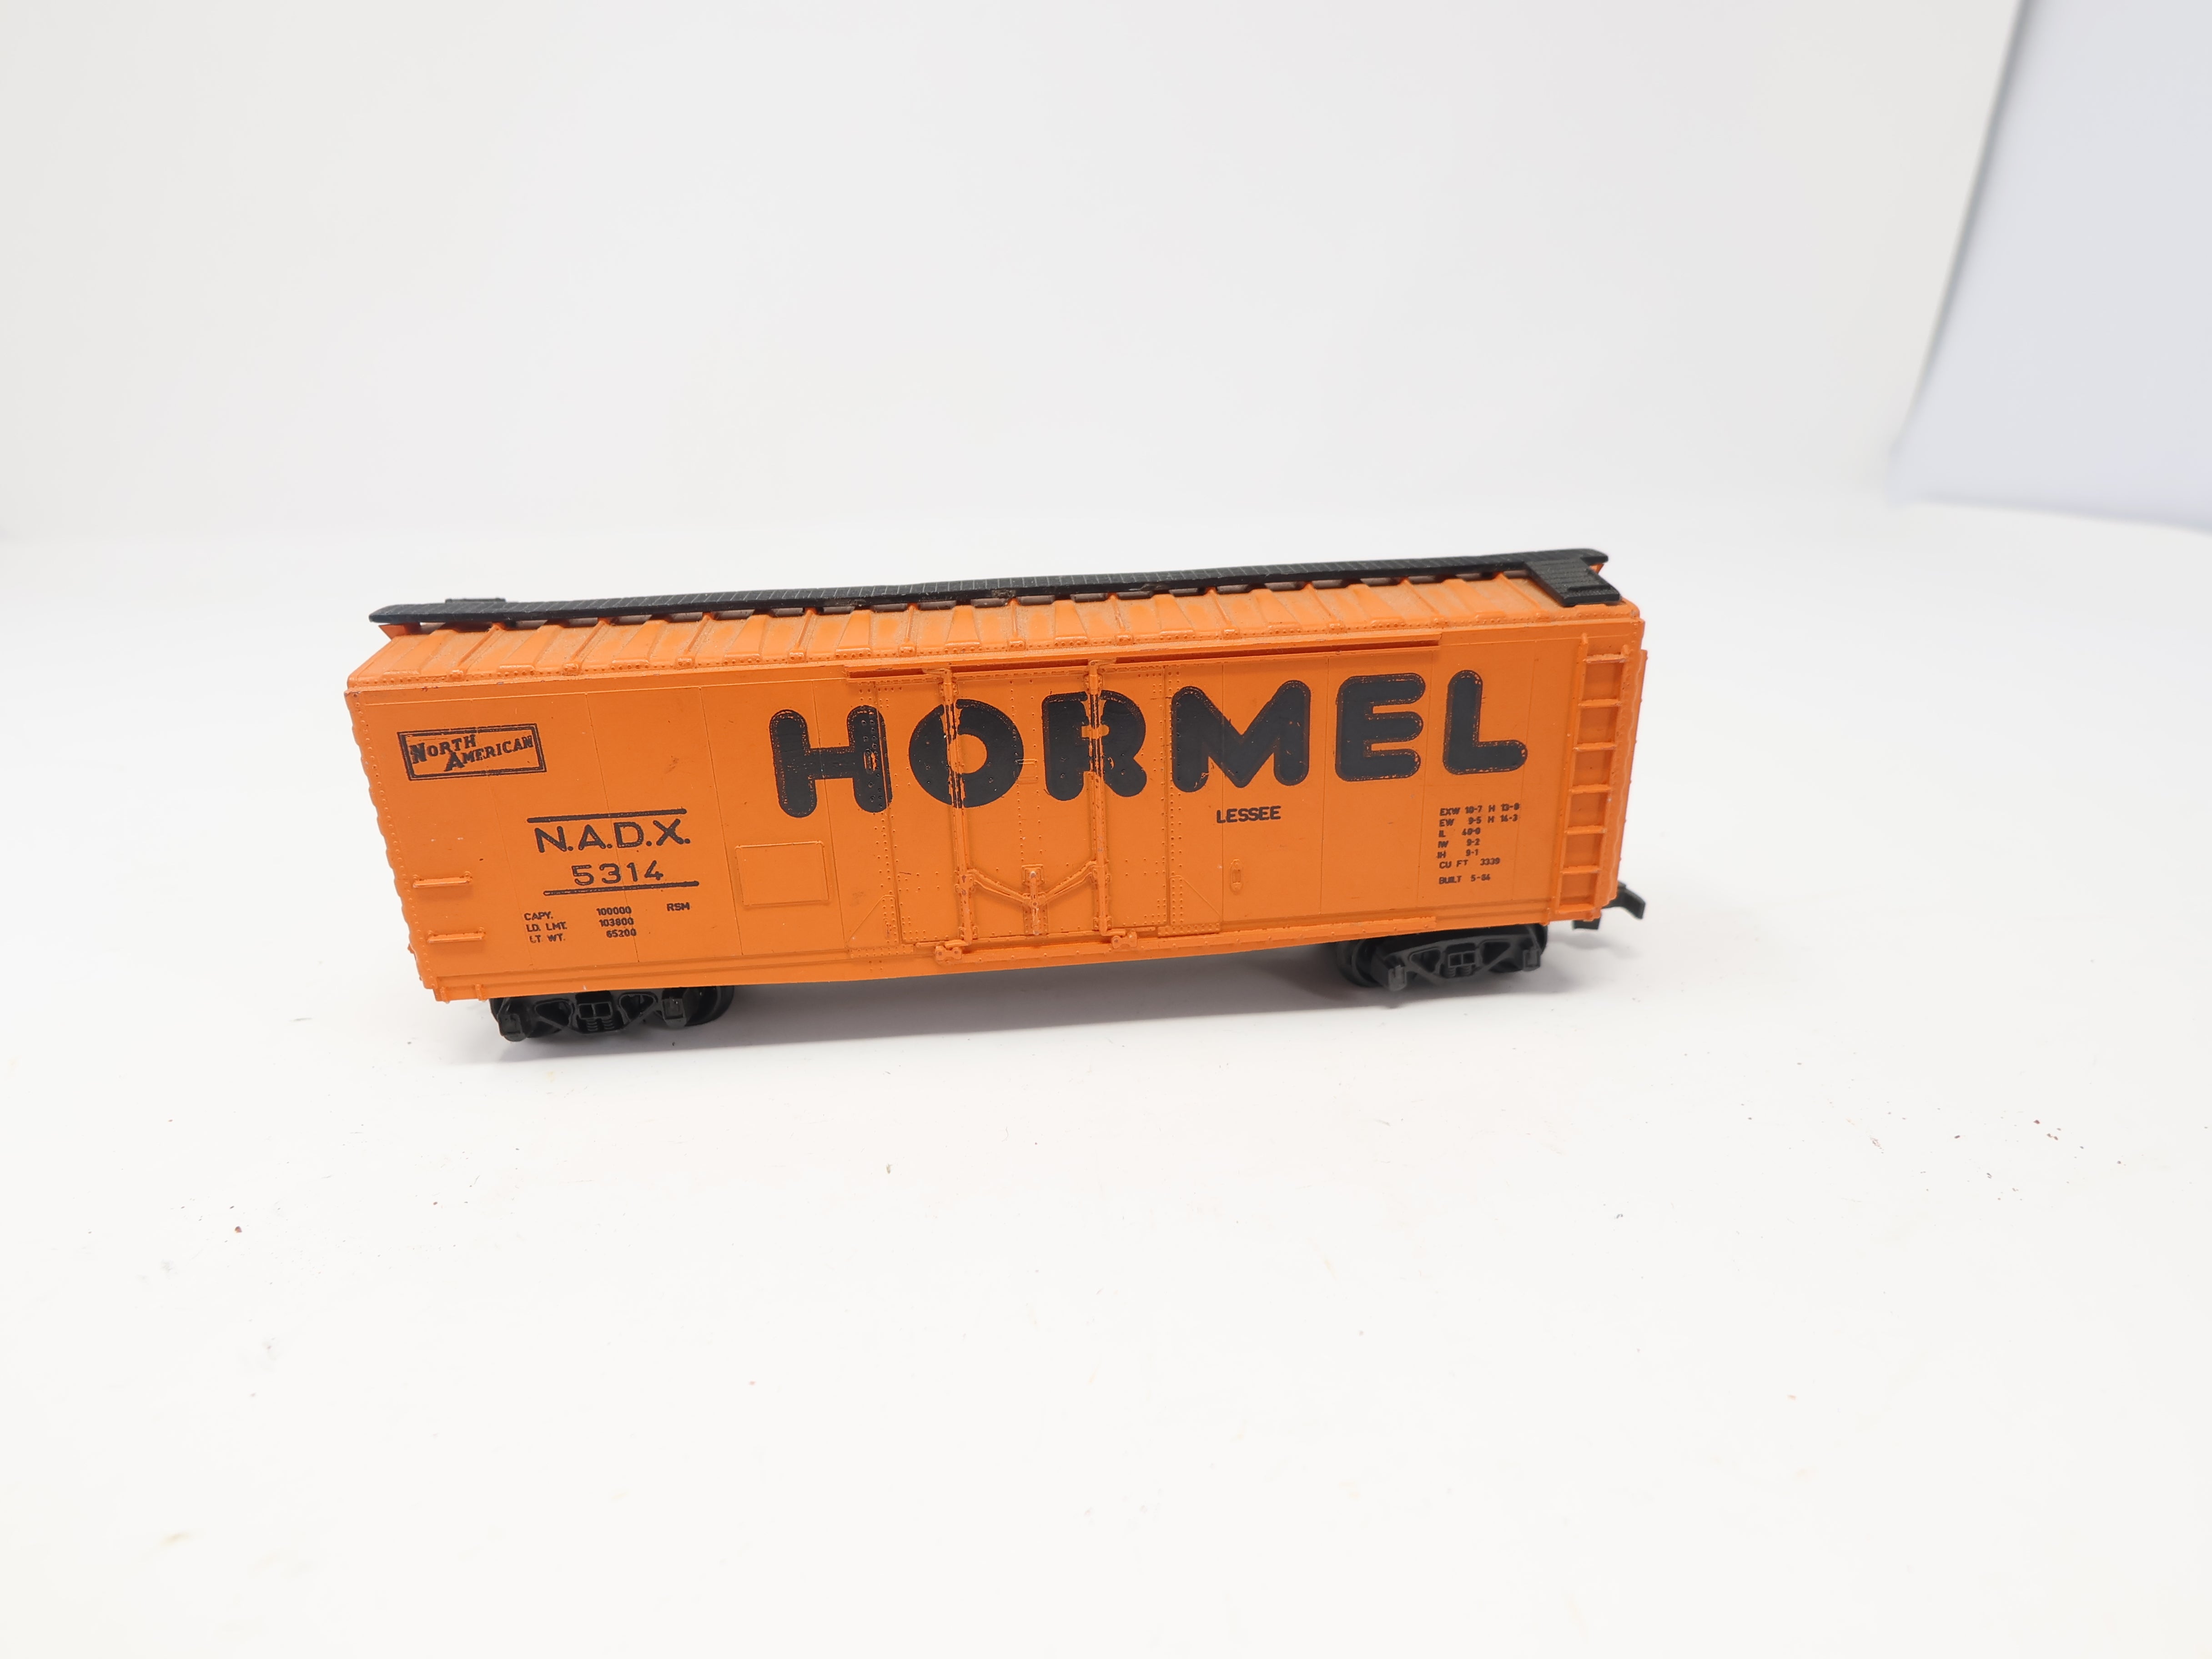 USED AHM HO Scale, 40' Steel Box Car, Hormel NADX #5314, Rough